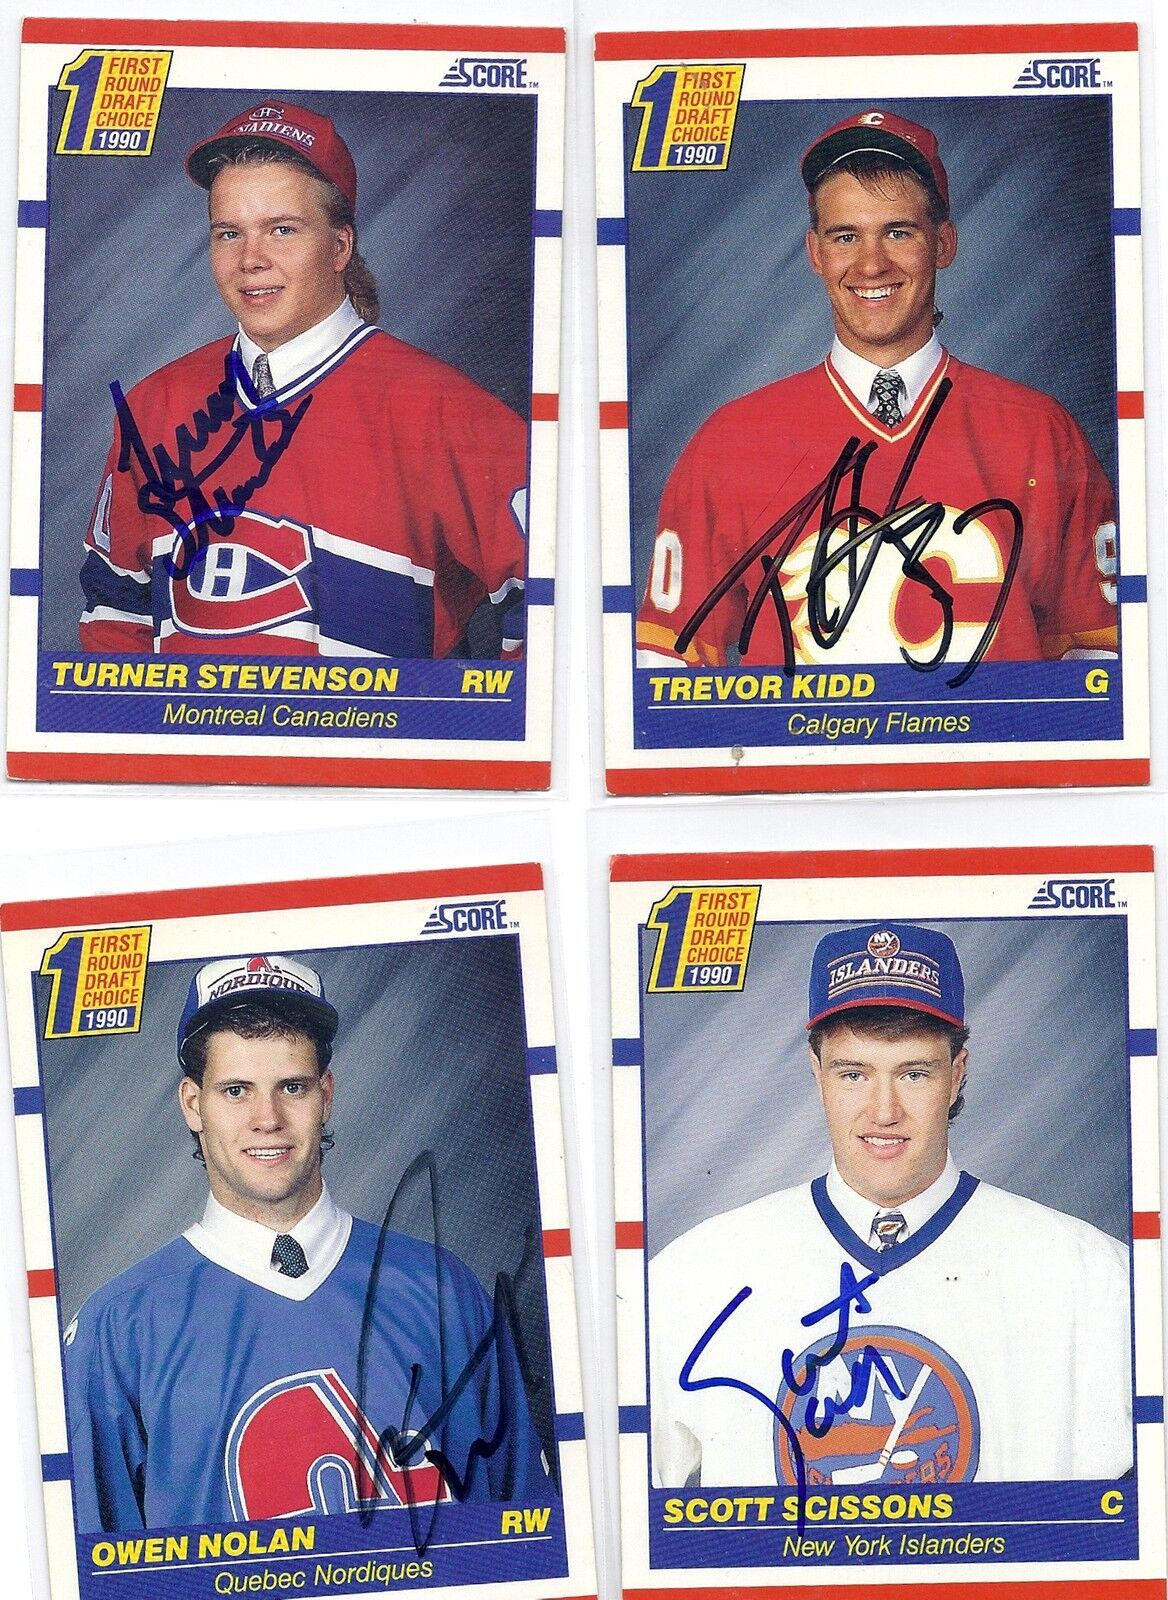 1990 Score #438 Trevor Kidd Calgary Flames Autographed Card Rookie